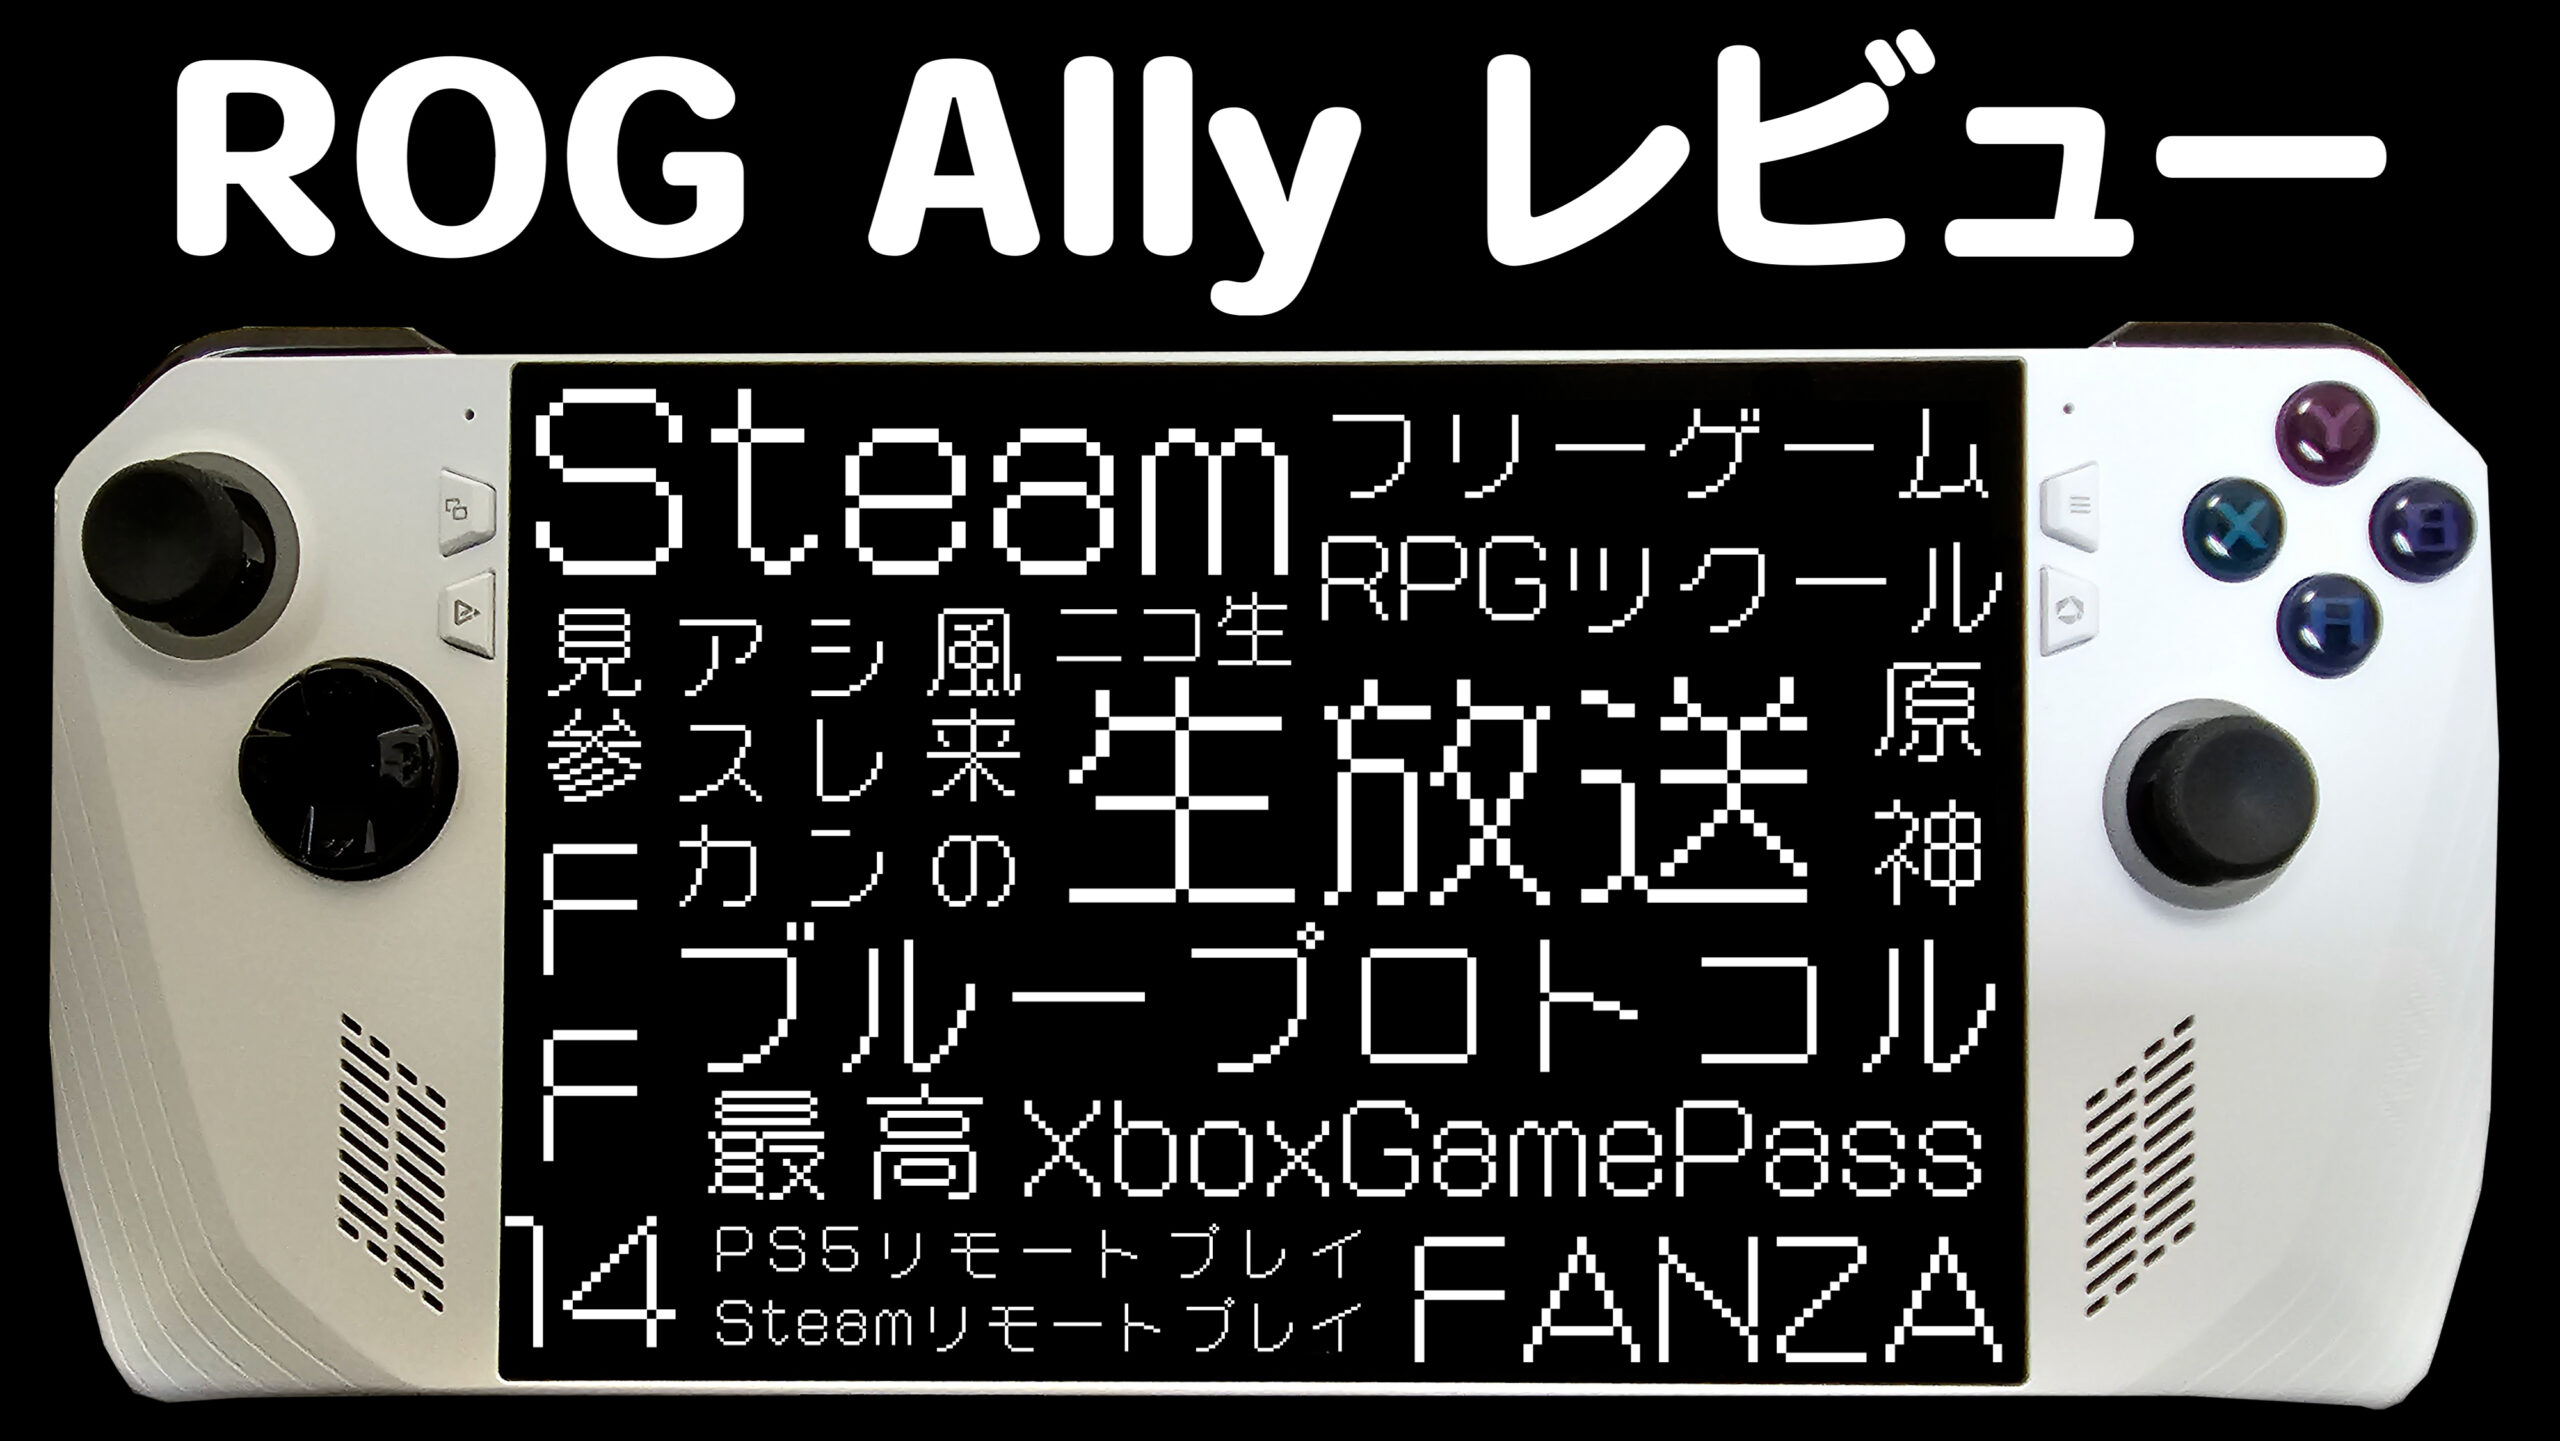 ROG Ally 数時間程度【RogAlly】 Extremeモデル - テレビゲーム